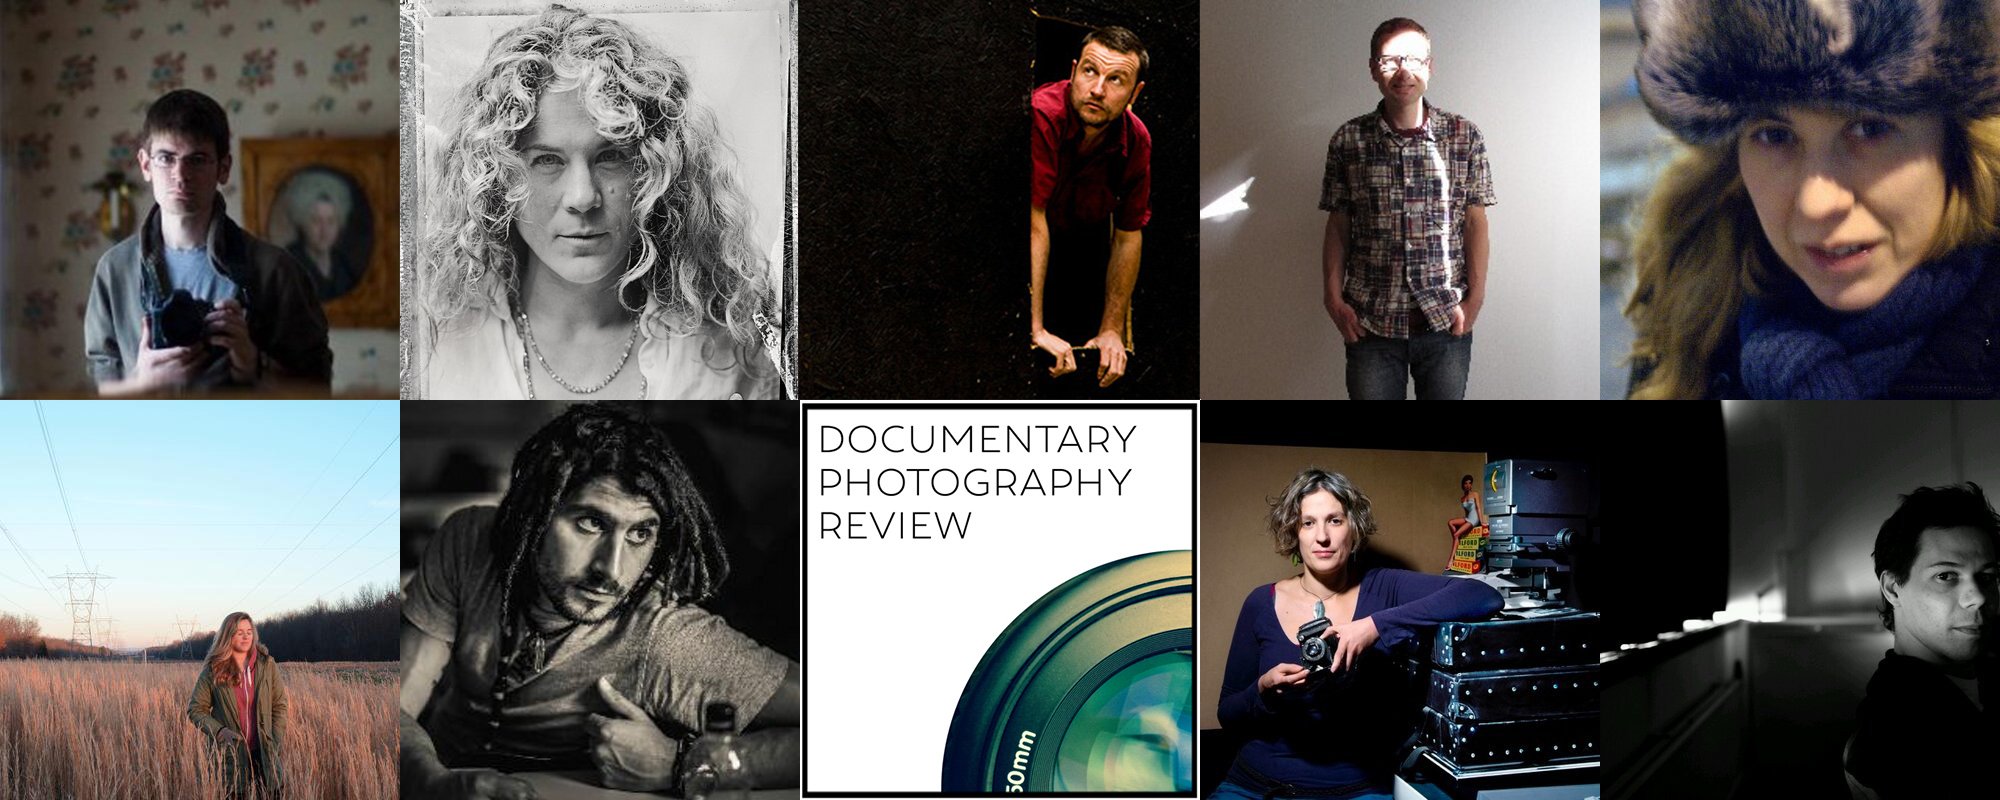 Documentary Photographers share their experiences